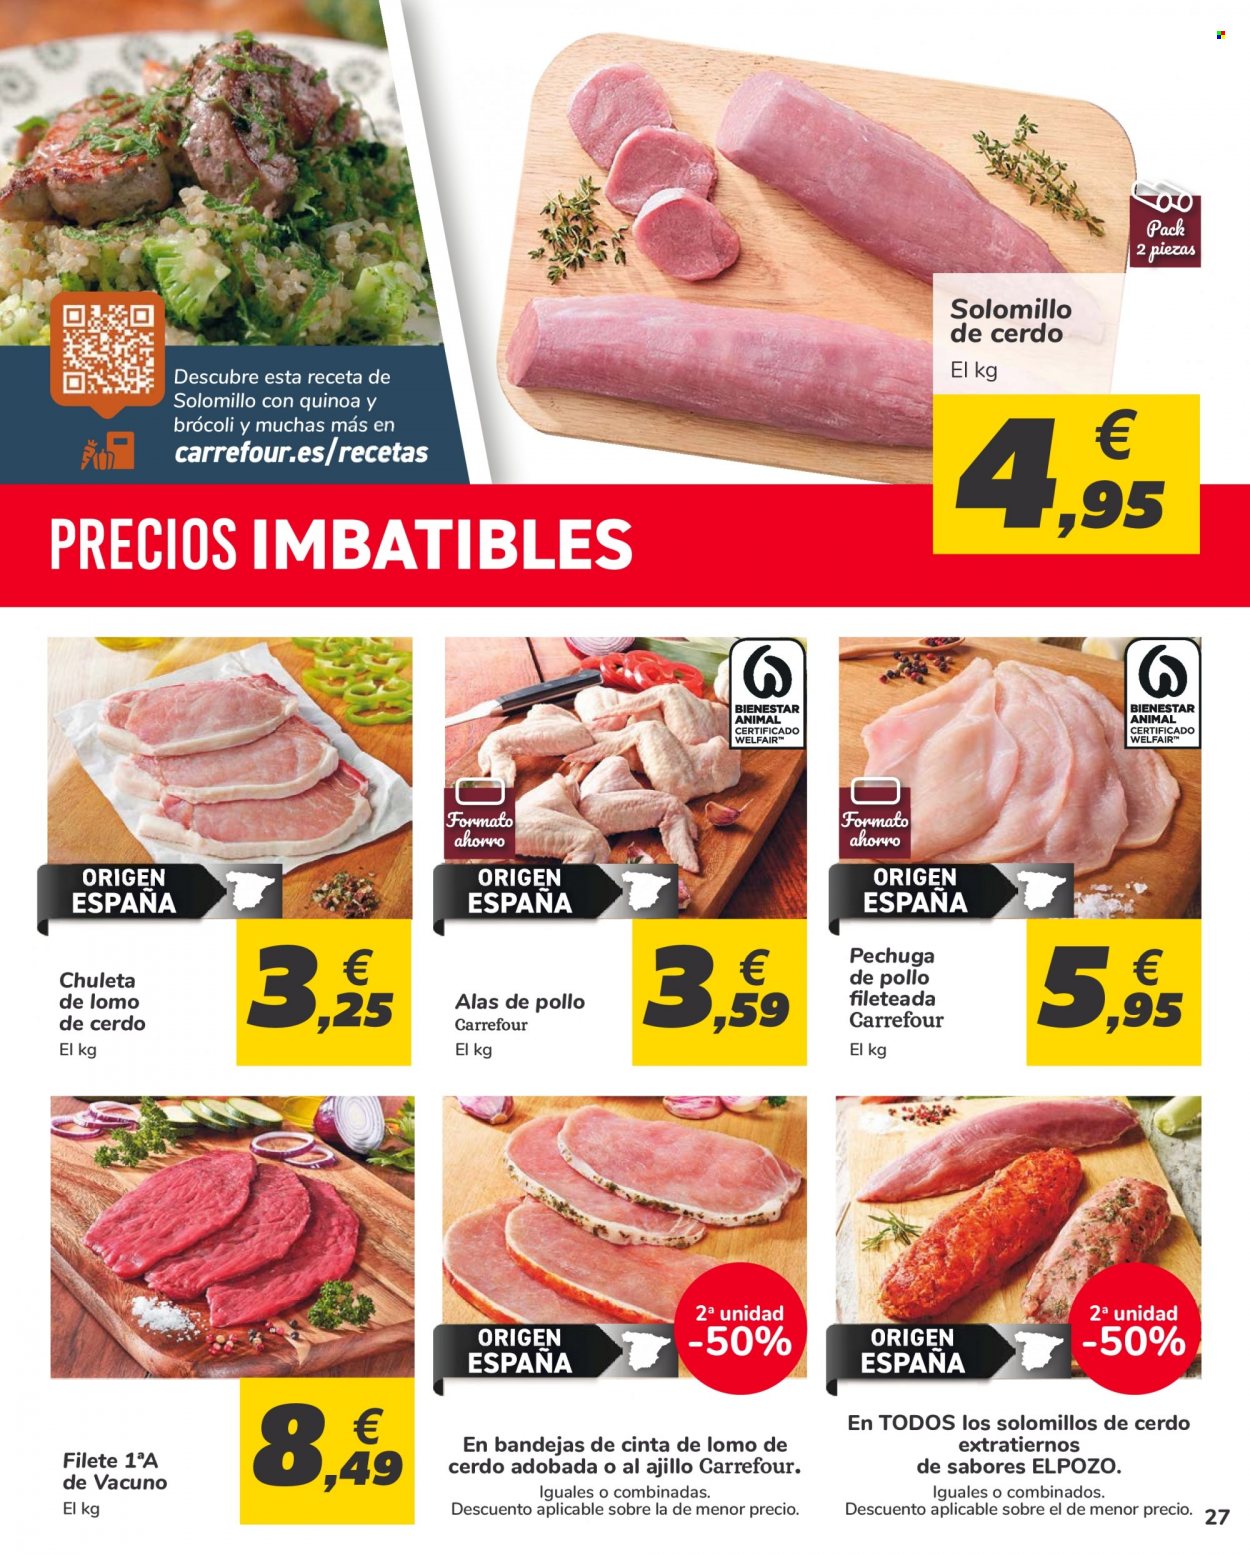 thumbnail - Folleto actual Carrefour - 18/01/22 - 27/01/22 - Ventas - chuleta, solomillo, lomo de cerdo, solomillo de cerdo, cinta de lomo, pechuga de pollo, alitas de pollo, pollo. Página 27.